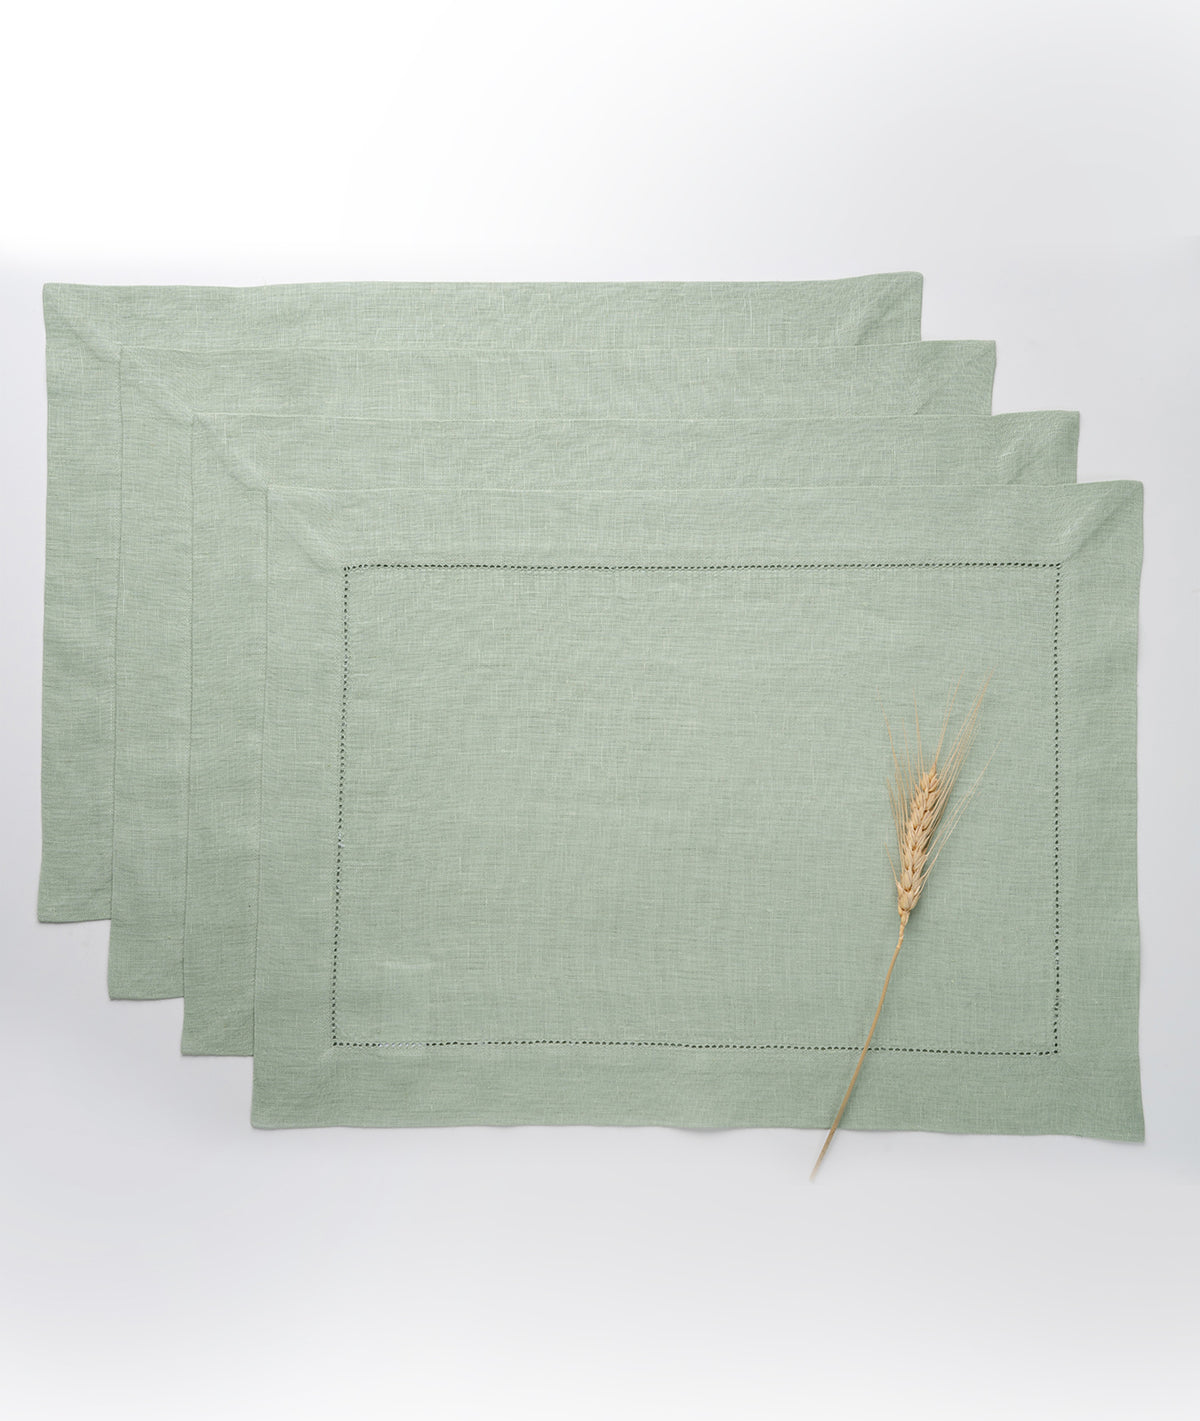 Sage Green Linen Placemats 14 x 19 Inch Set of 4 - Hemstitch